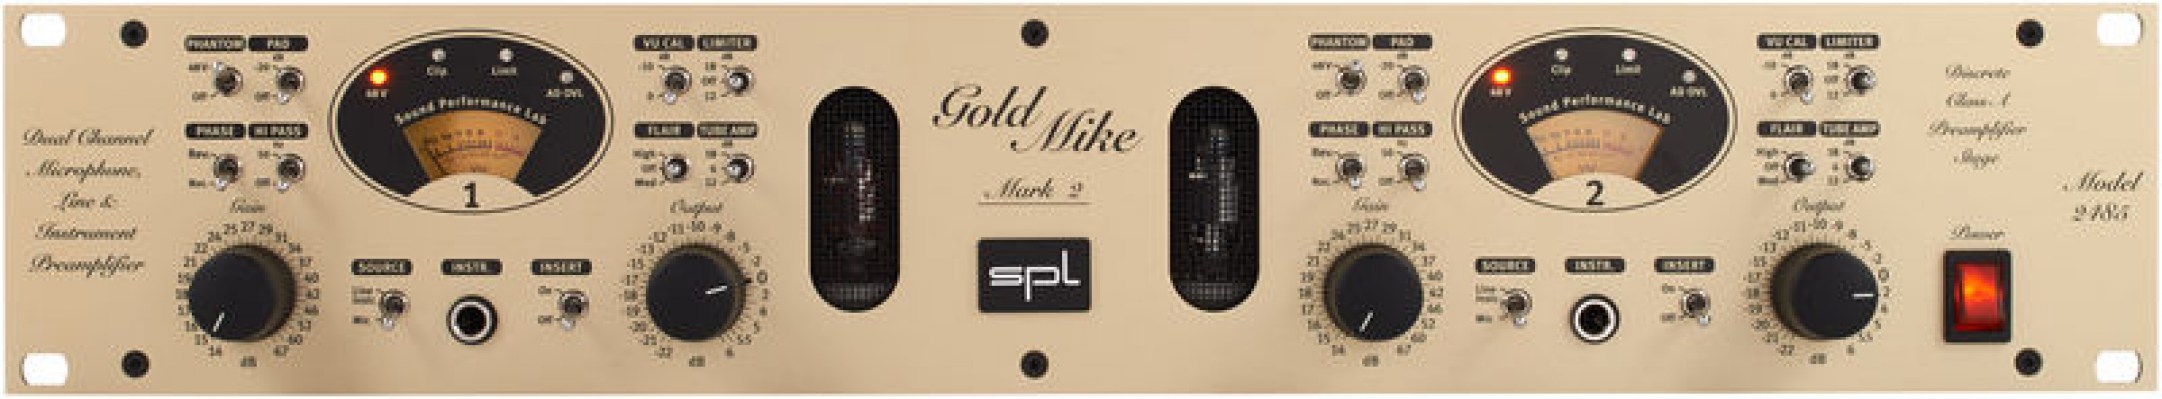 SPL Goldmike Mk2 Premium